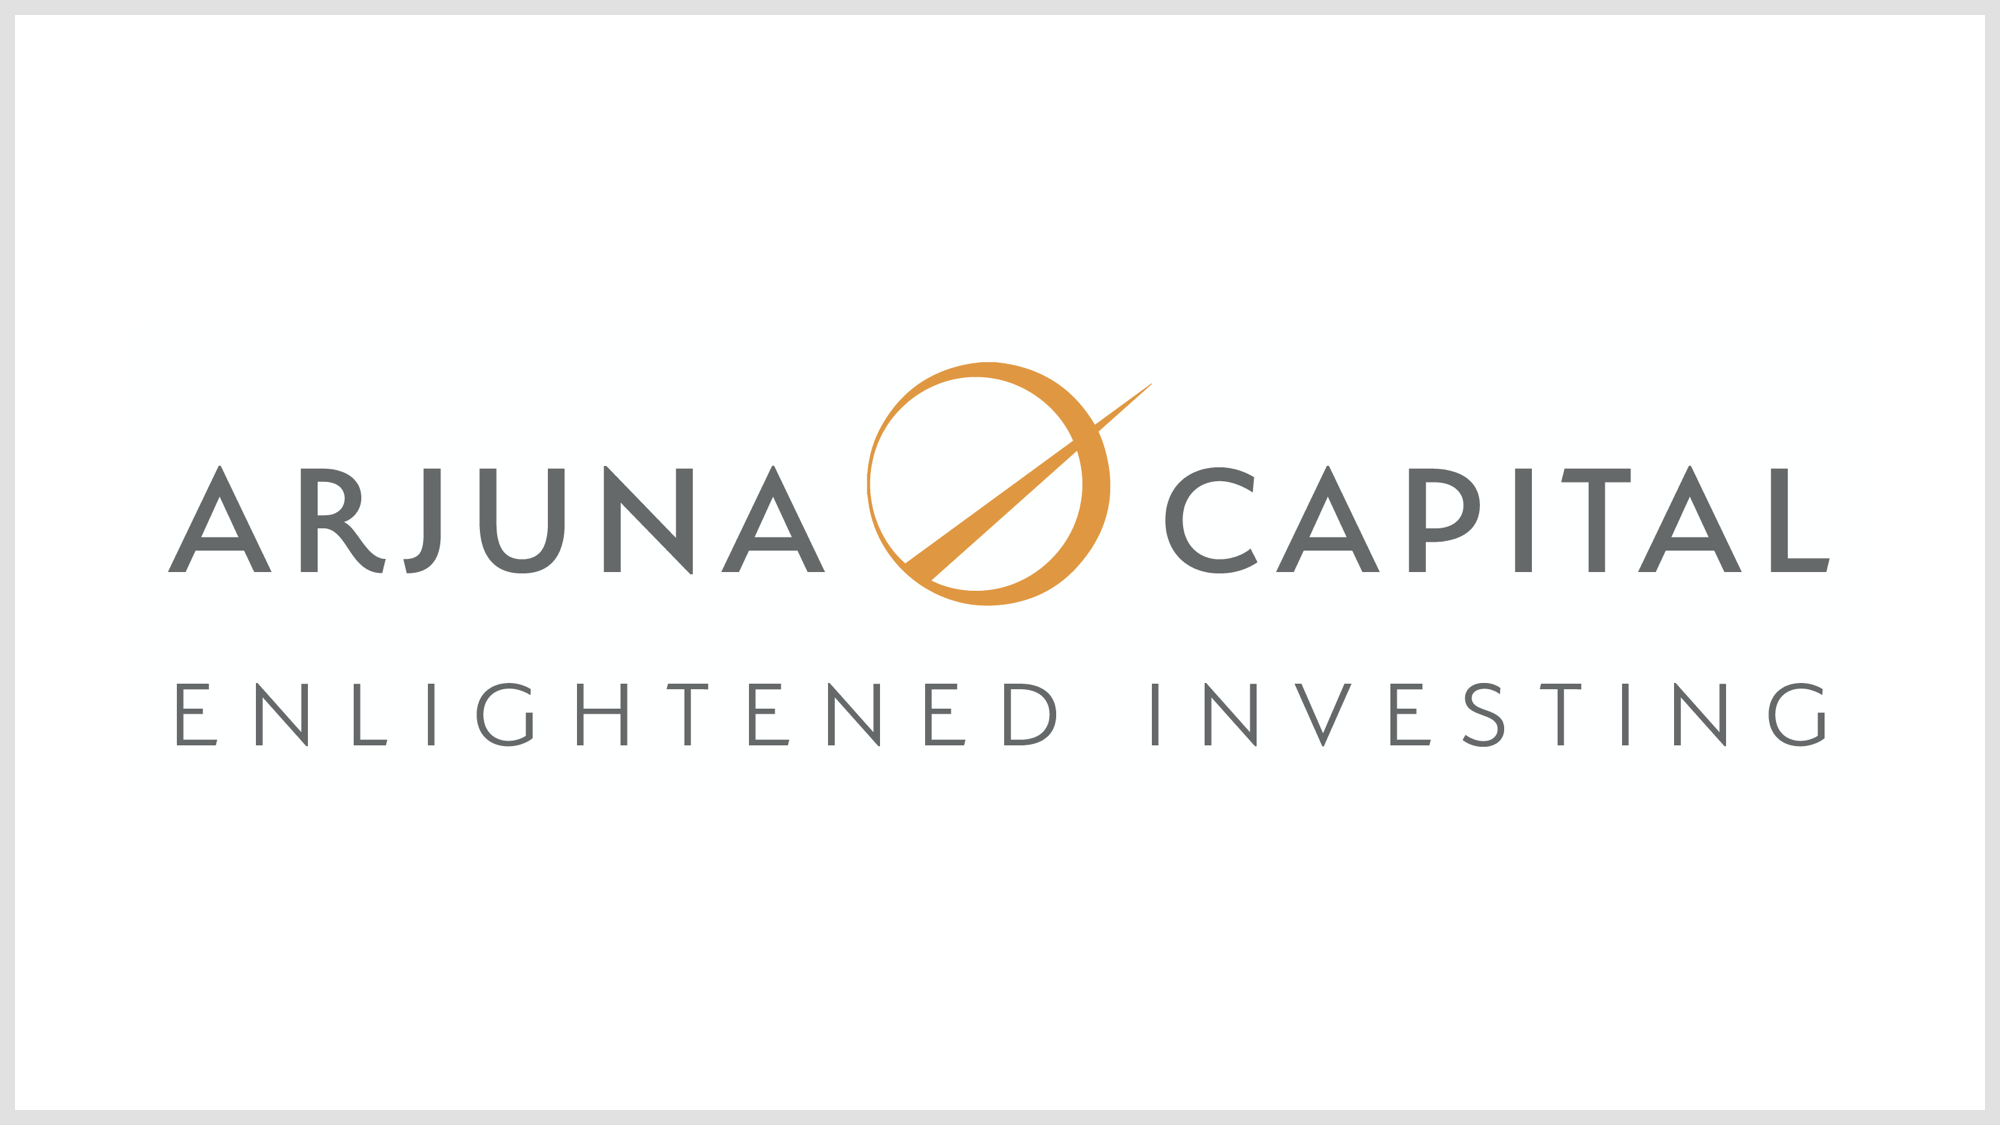 Arjuna Capital Enlightened Investing.png